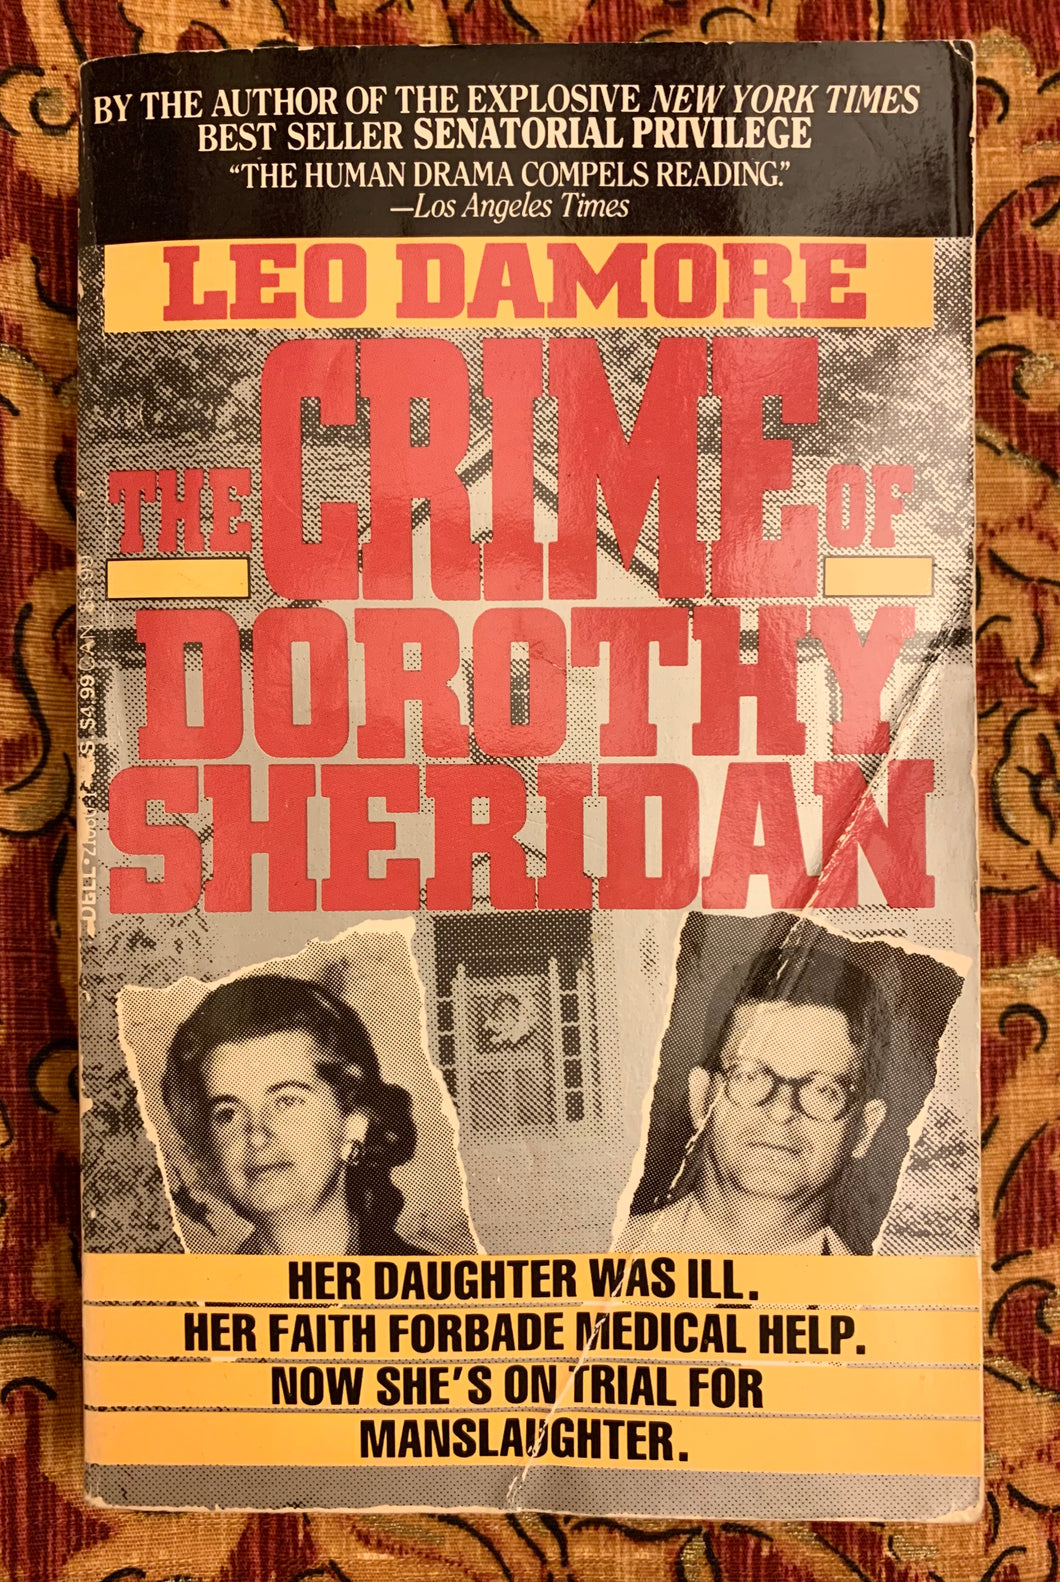 The Crime of Dorothy Sheridan